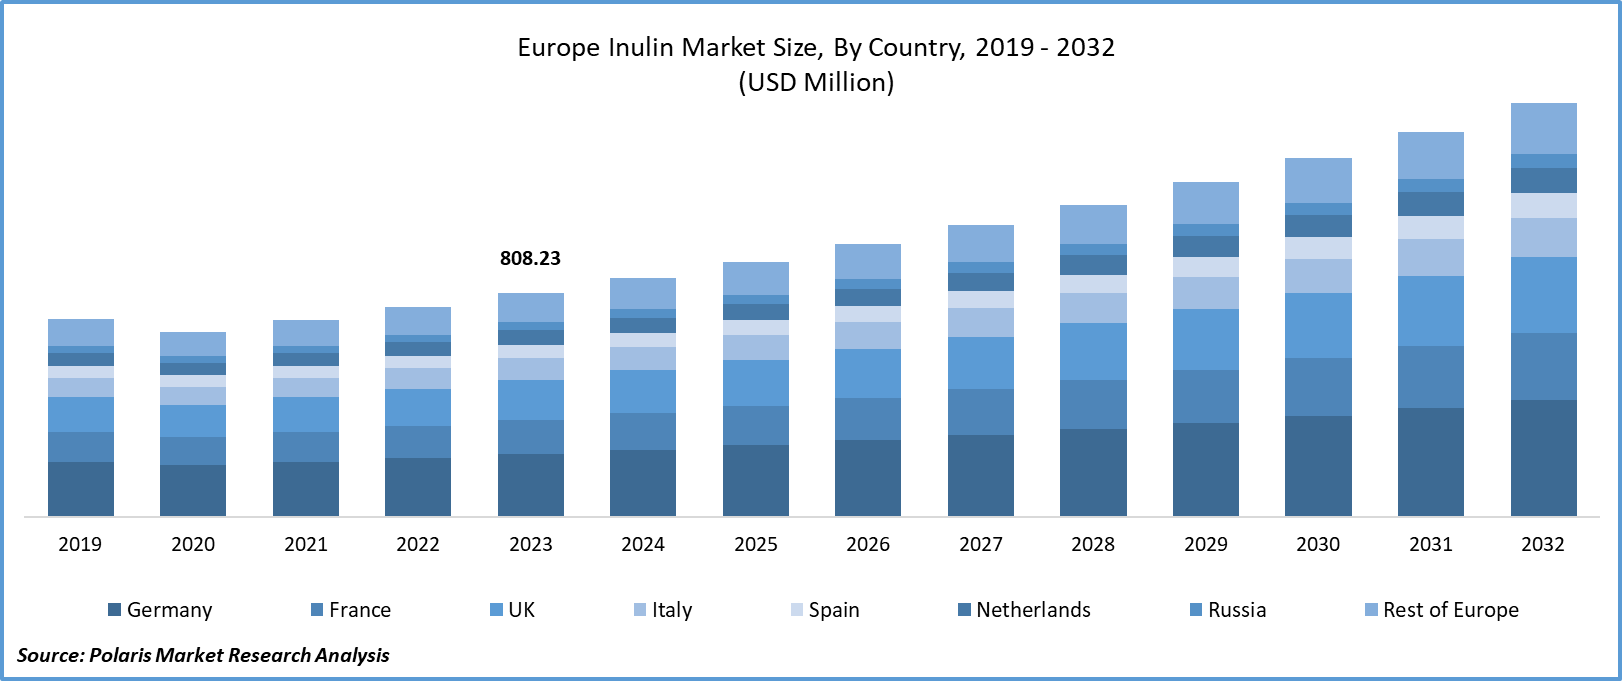 Europe Inulin Market Size